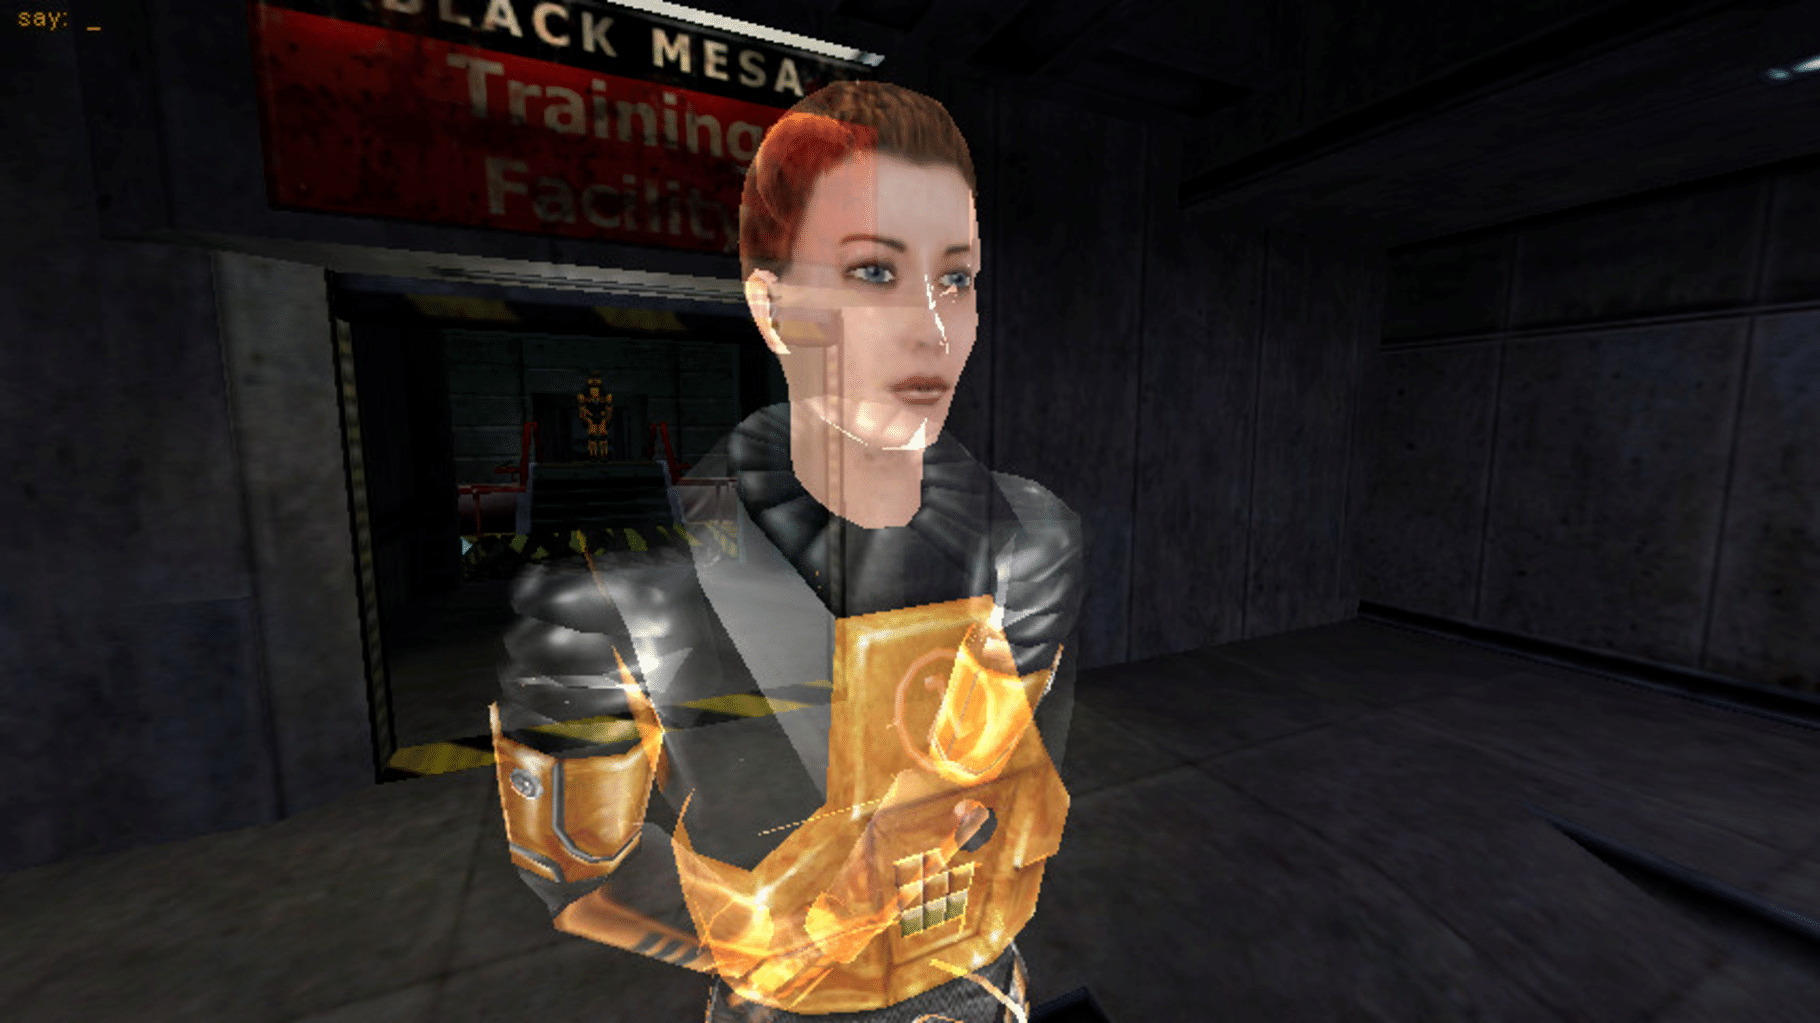 Half-Life: Decay screenshot